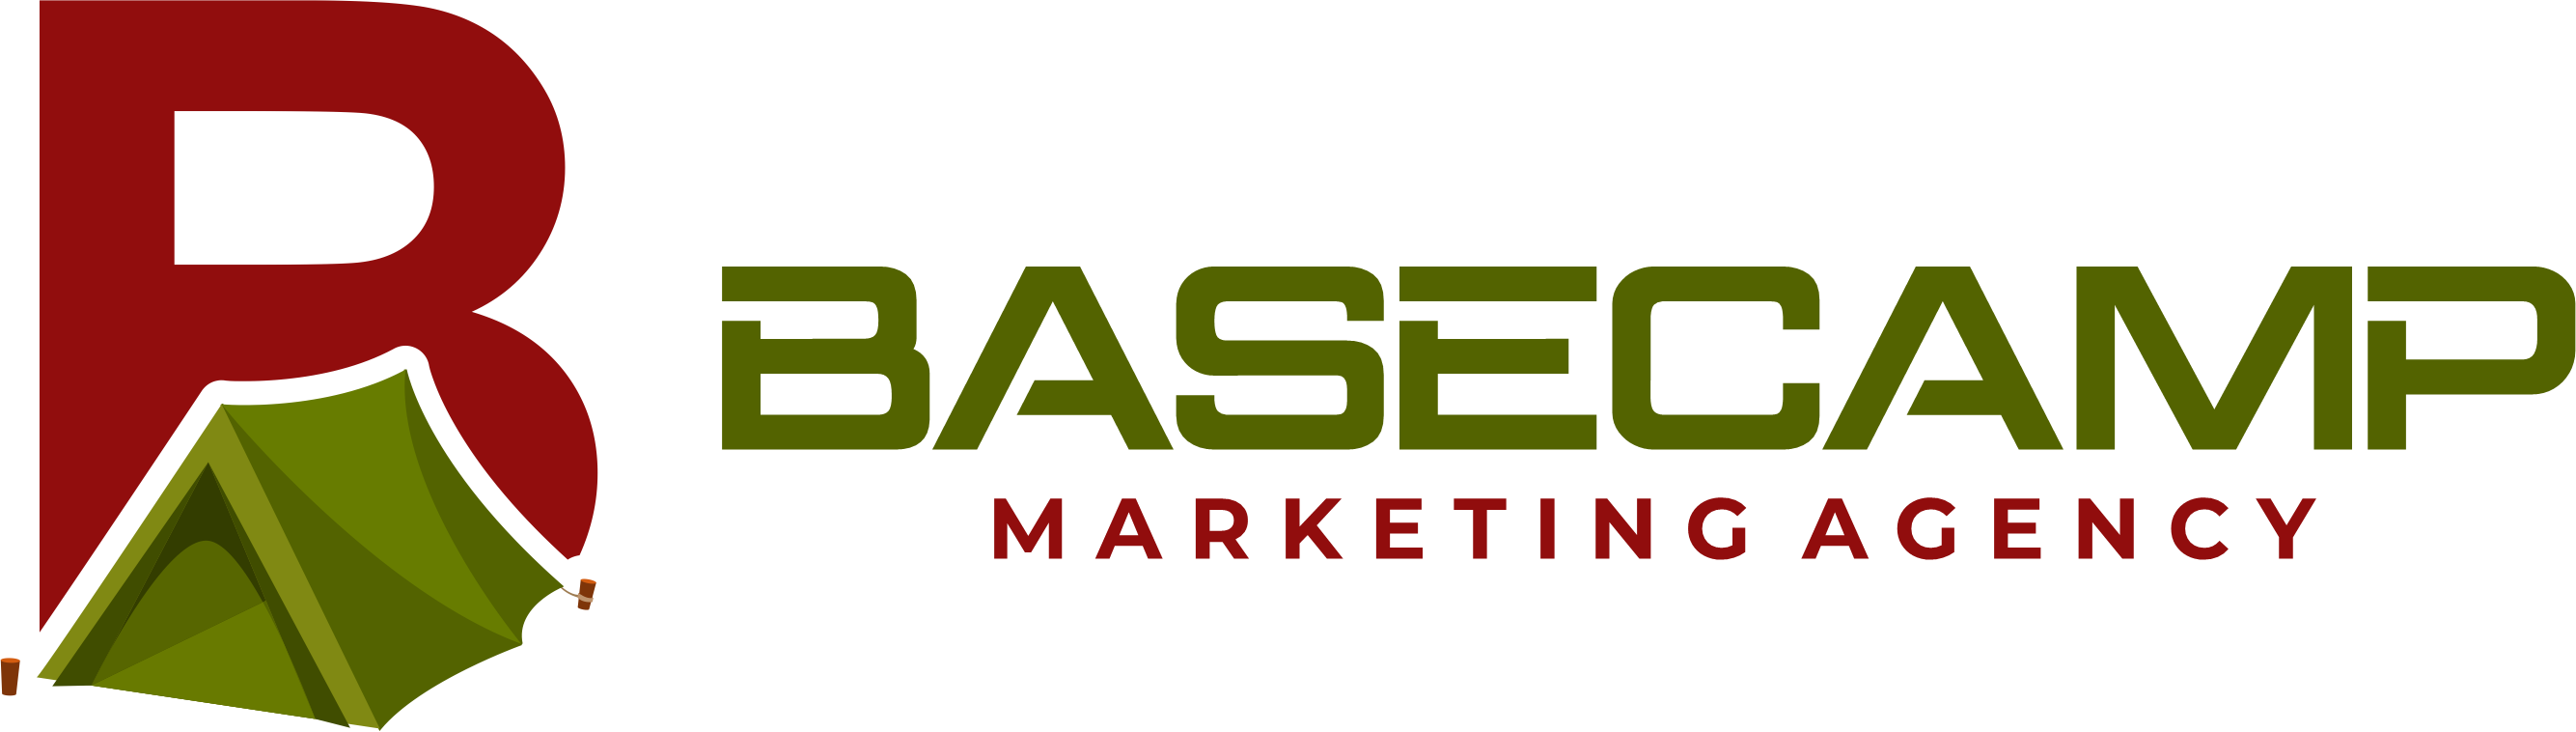 Basecamp Marketing Agency